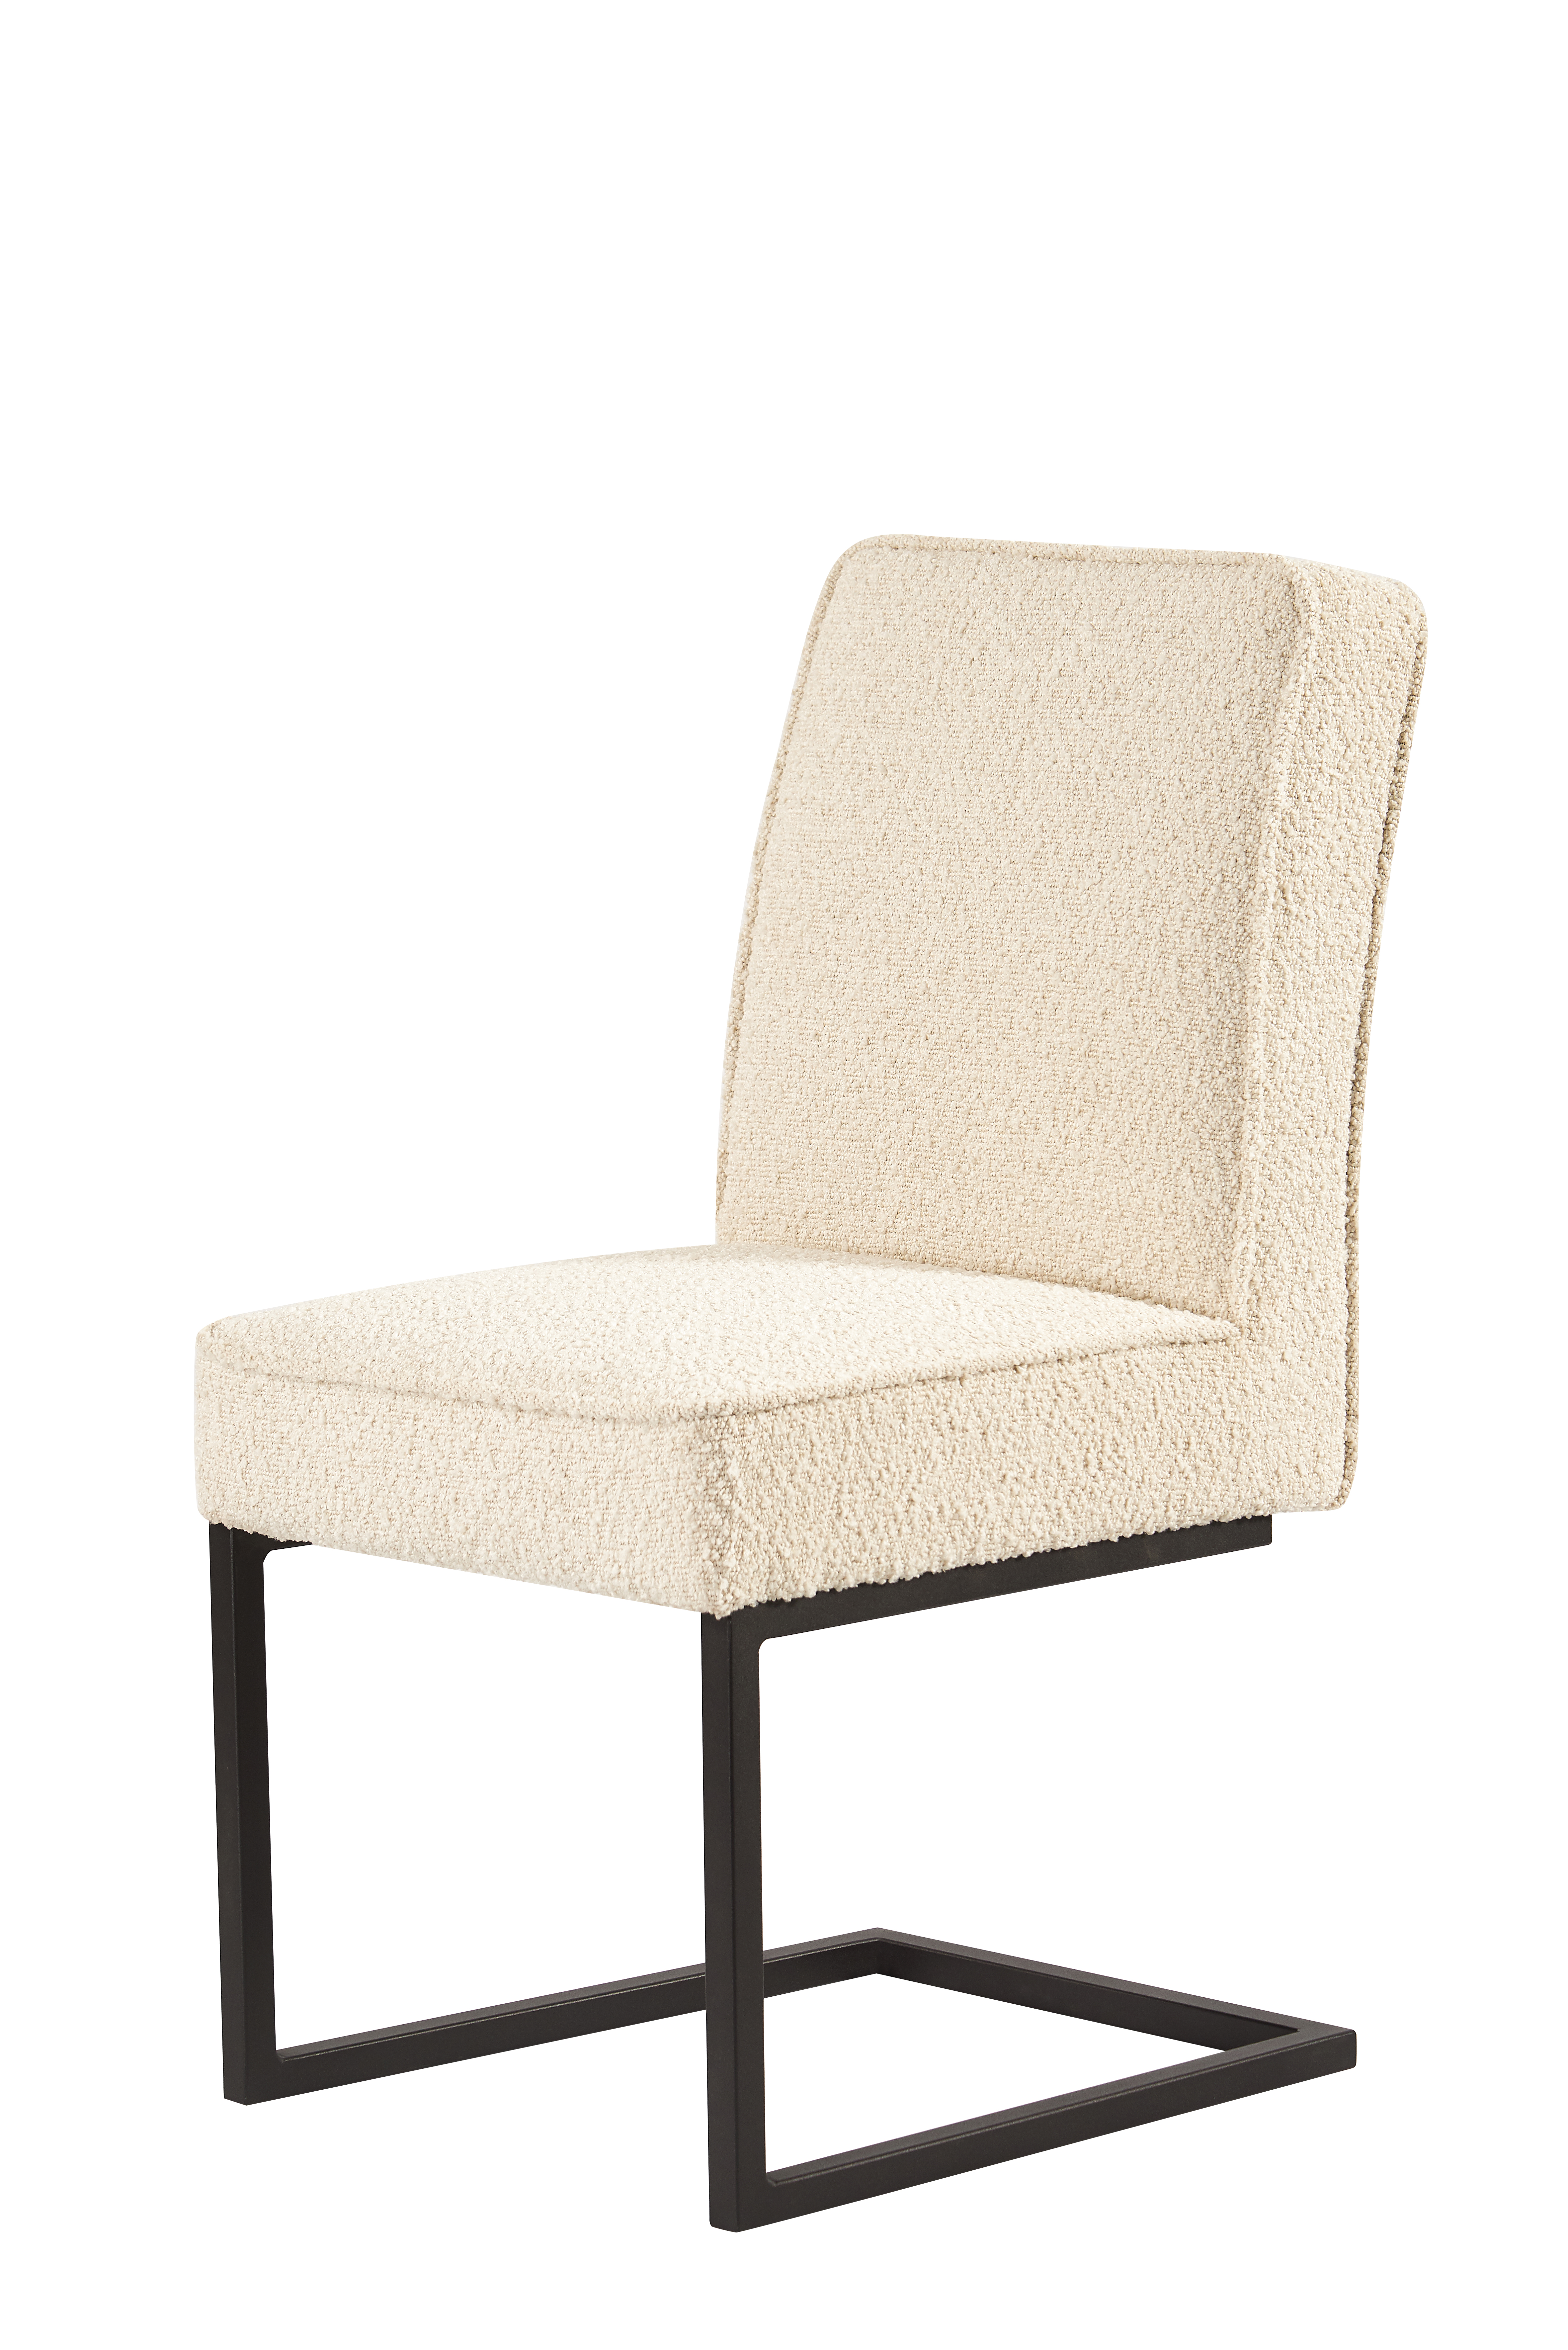 TC-2150 Armless Dining Chair